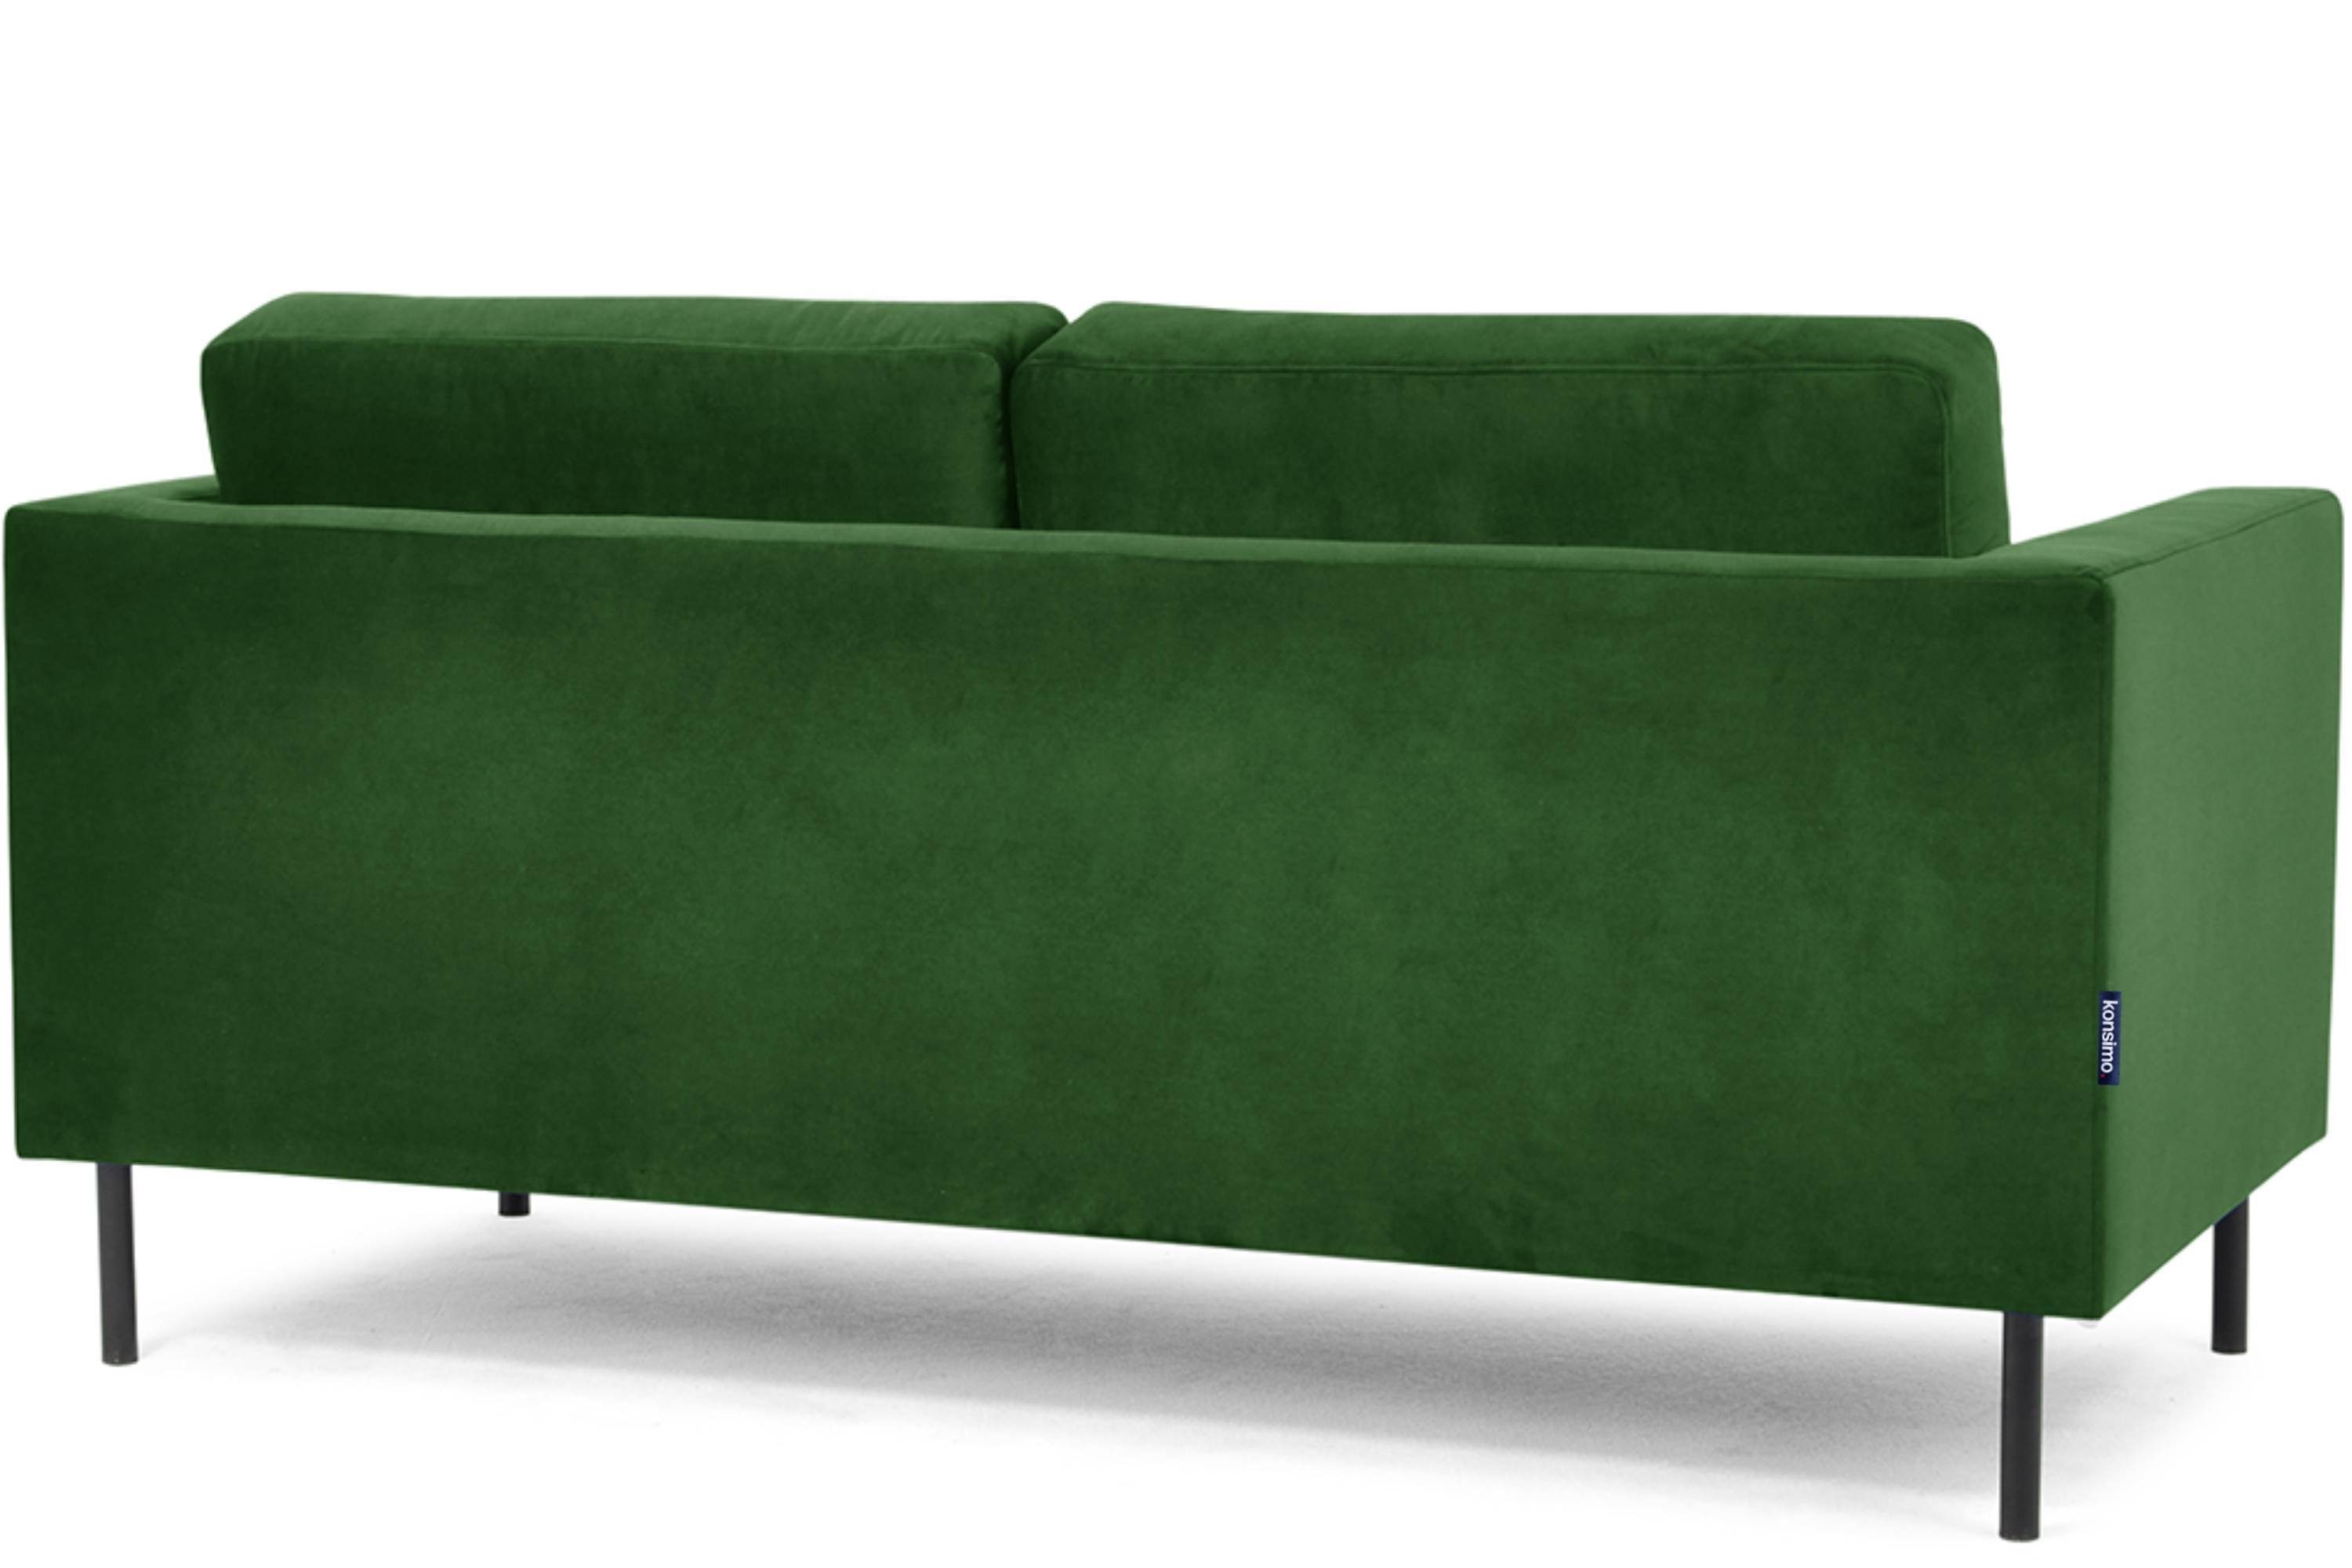 Konsimo 2-Sitzer TOZZI grün Personen, universelles grün grün | Sofa 2 | Design hohe Beine